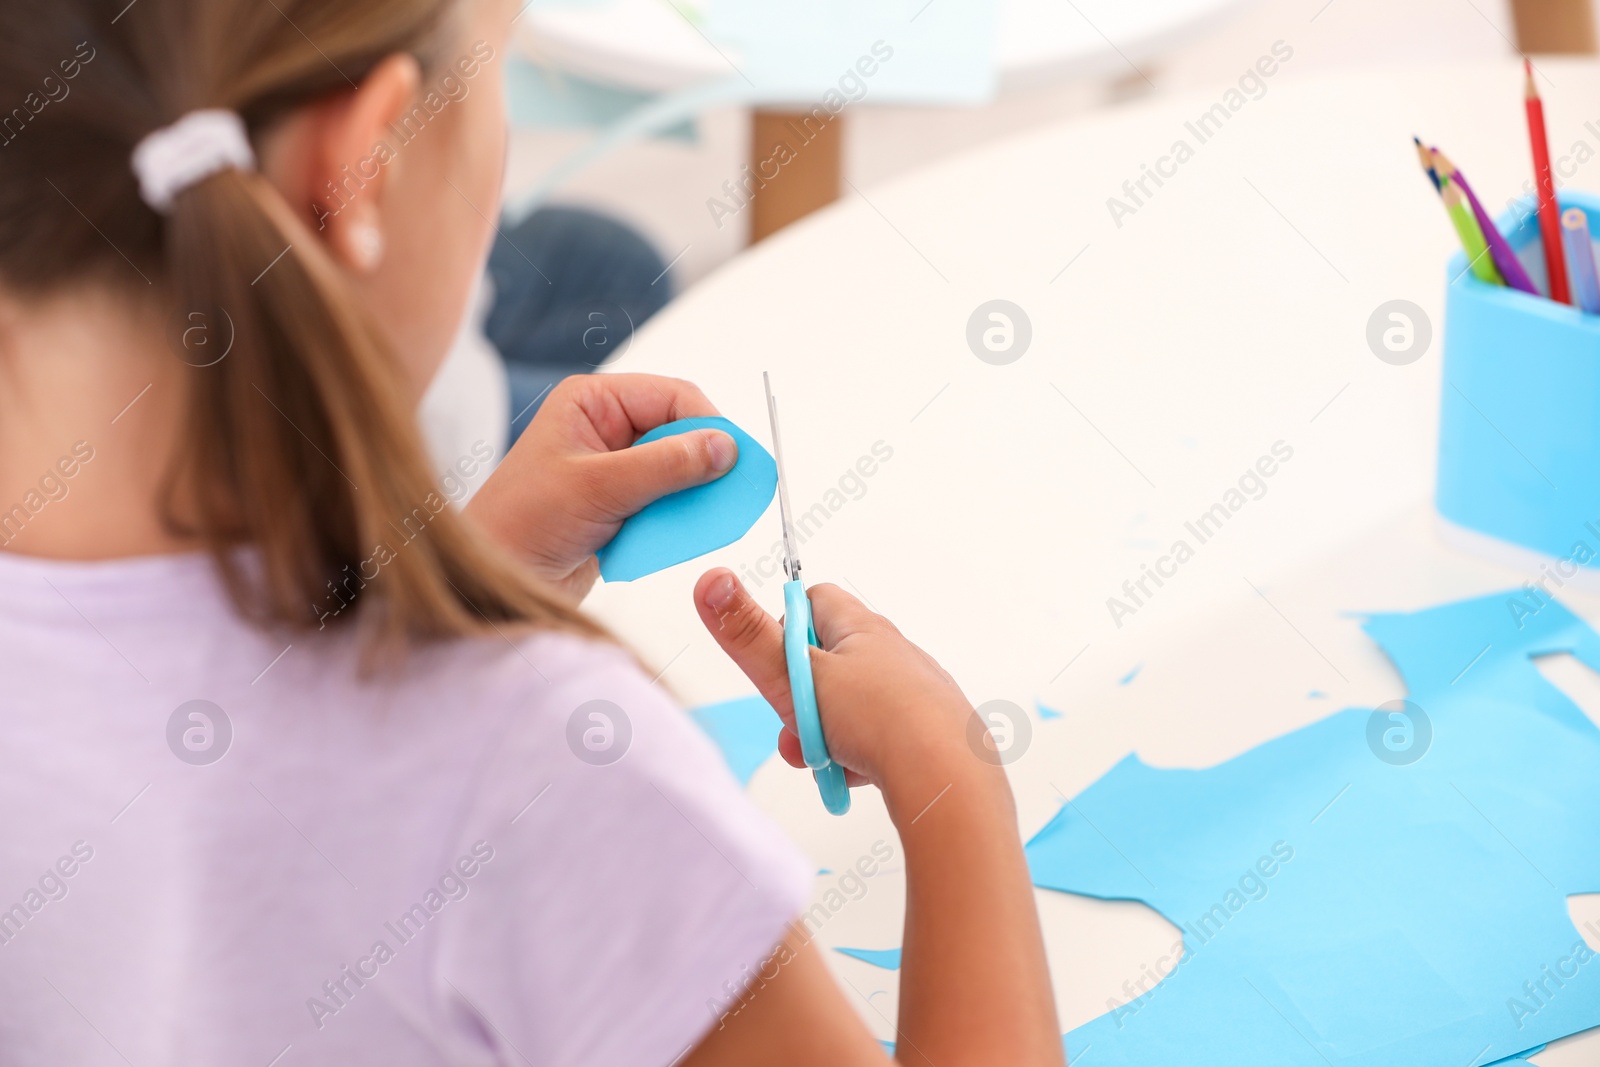 Photo of Little girl cutting color paper with scissors at desk, closeup. Kindergarten activities